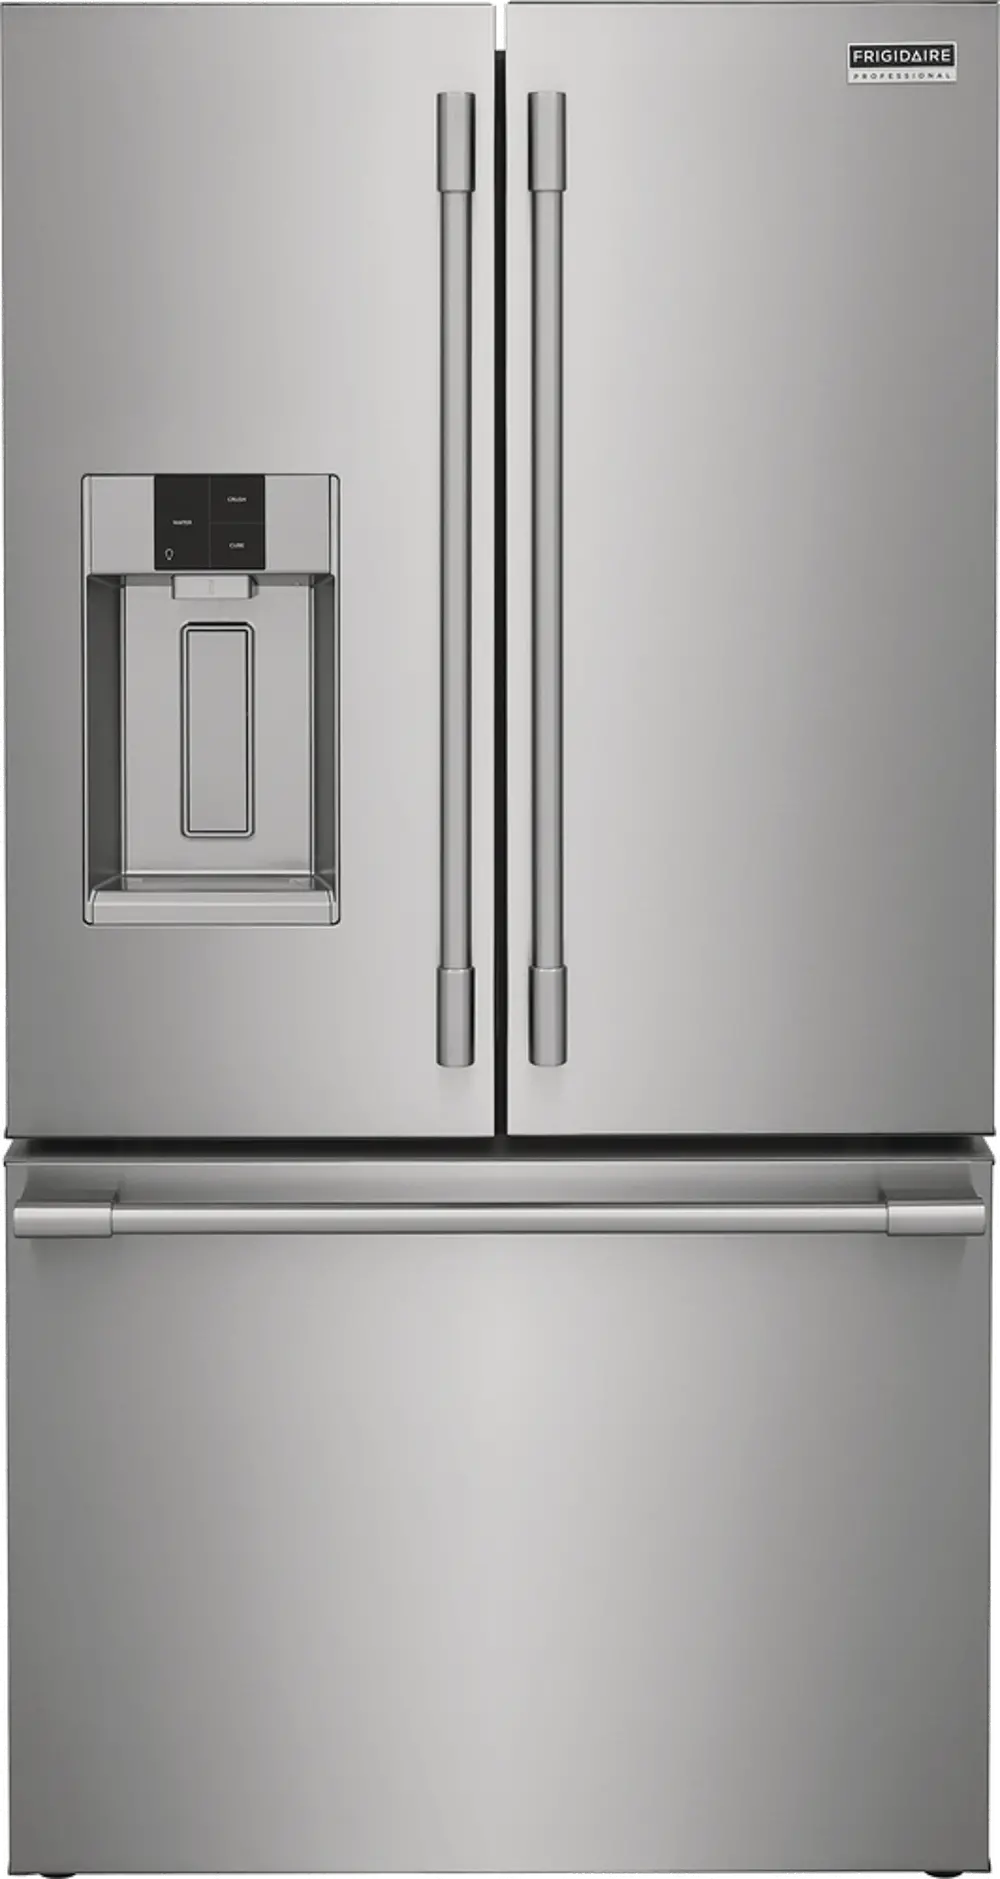 PRFC2383AF Frigidaire Professional 22.6 cu ft French Door Refrigerator - Counter Depth Stainless Steel-1